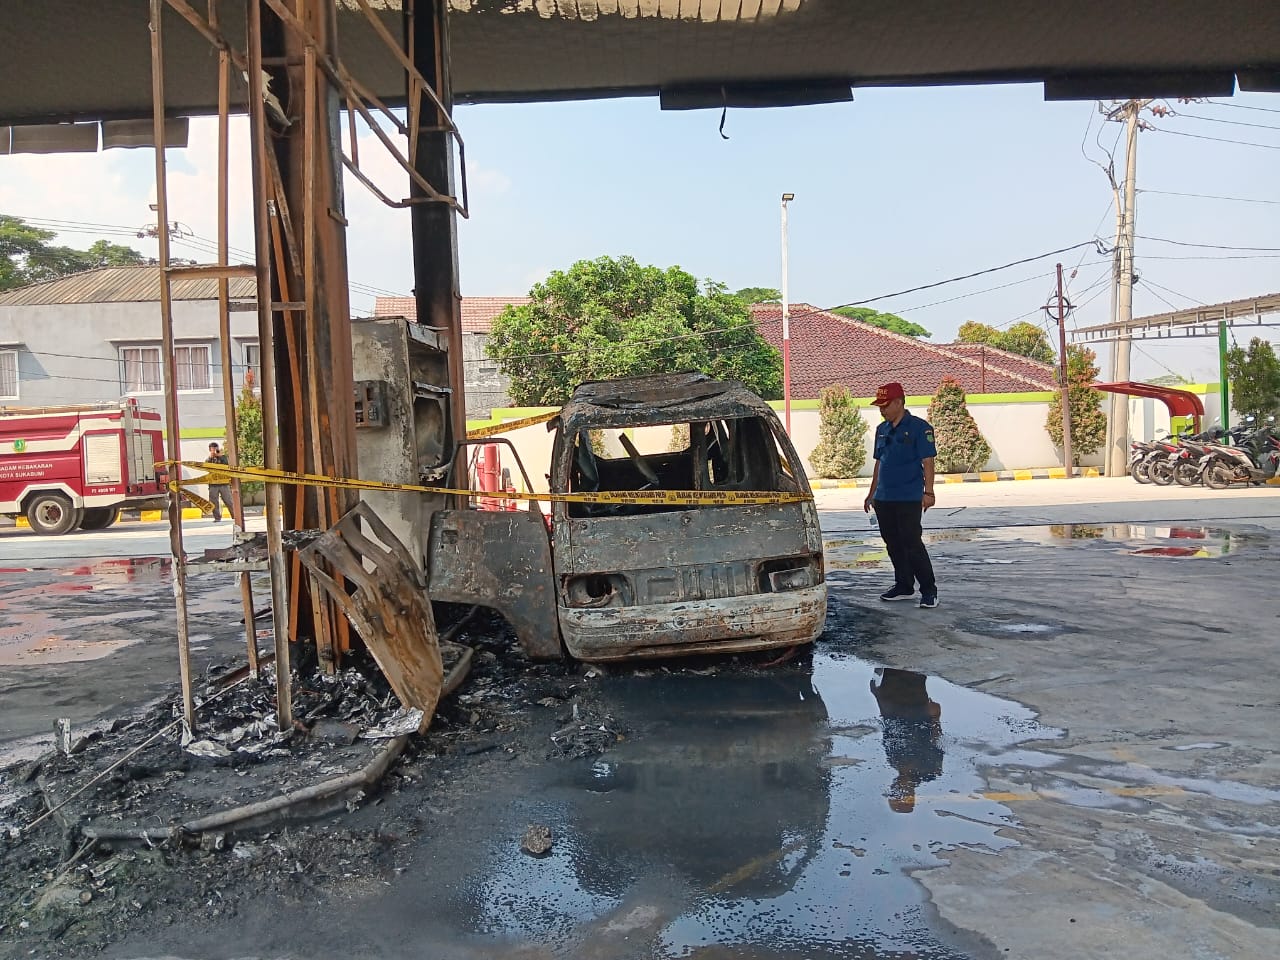 HANGUS TERBAKAR: Kondisi satu unit kendaraan roda empat hangus terbakar di SPBU 3343121 Jalan Raya Jalur Sudajayahikir, Kelurahan/Kecamatan Baros, Rabu (1/11).(FT: BAMBANG/RADARSUKABUMI)